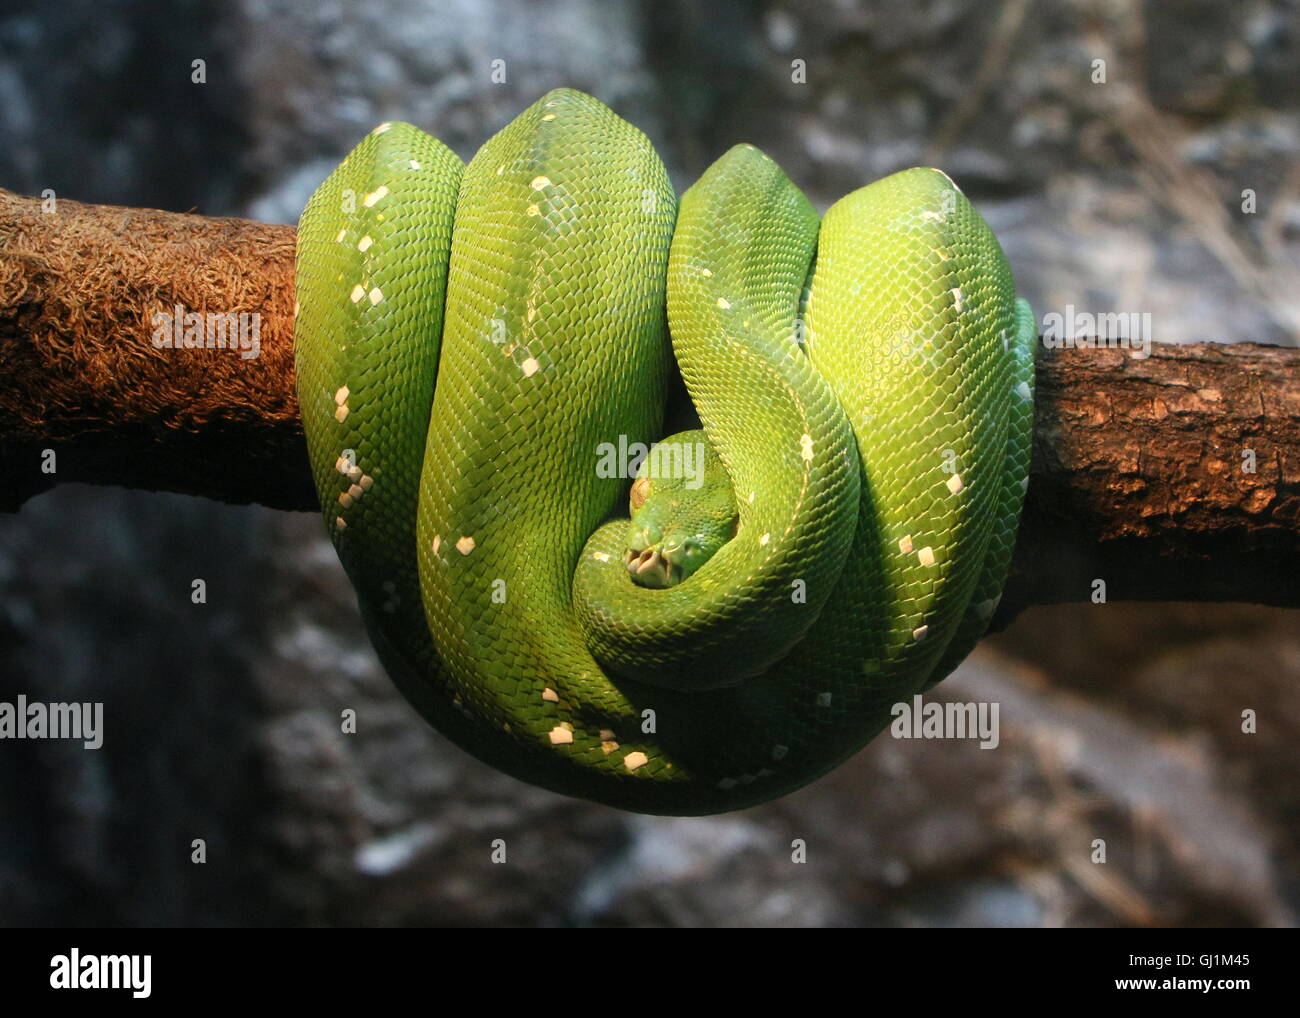 Southeast Asian Green tree python or Chondro snake (Morelia viridis) wrapped around a branch, facing the camera Stock Photo